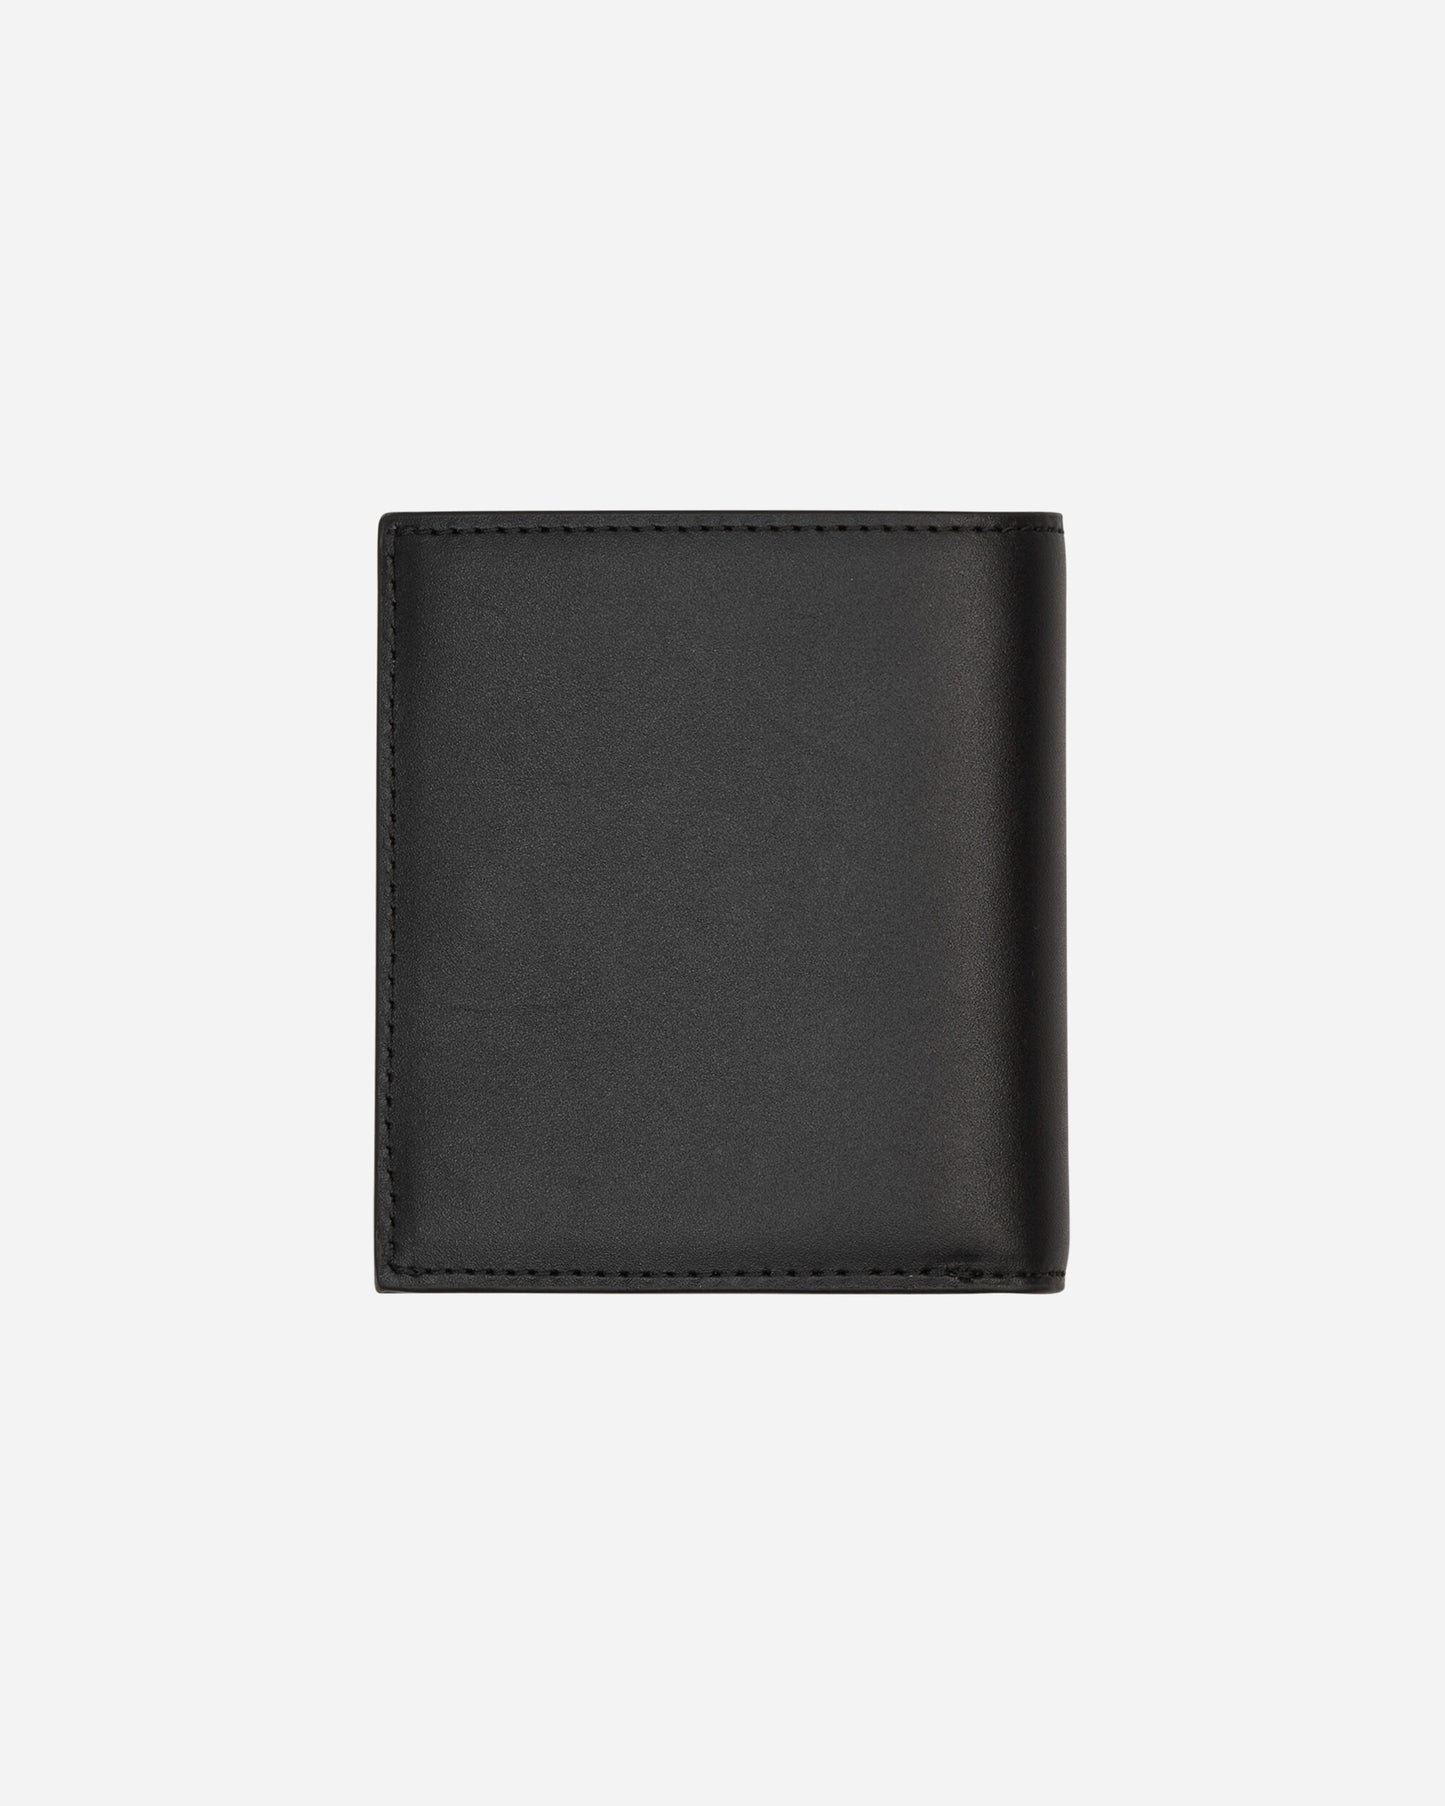 KENZO Paris Mini Fold Wallet Black Wallets and Cardholders Wallets FD55PM403L43 99